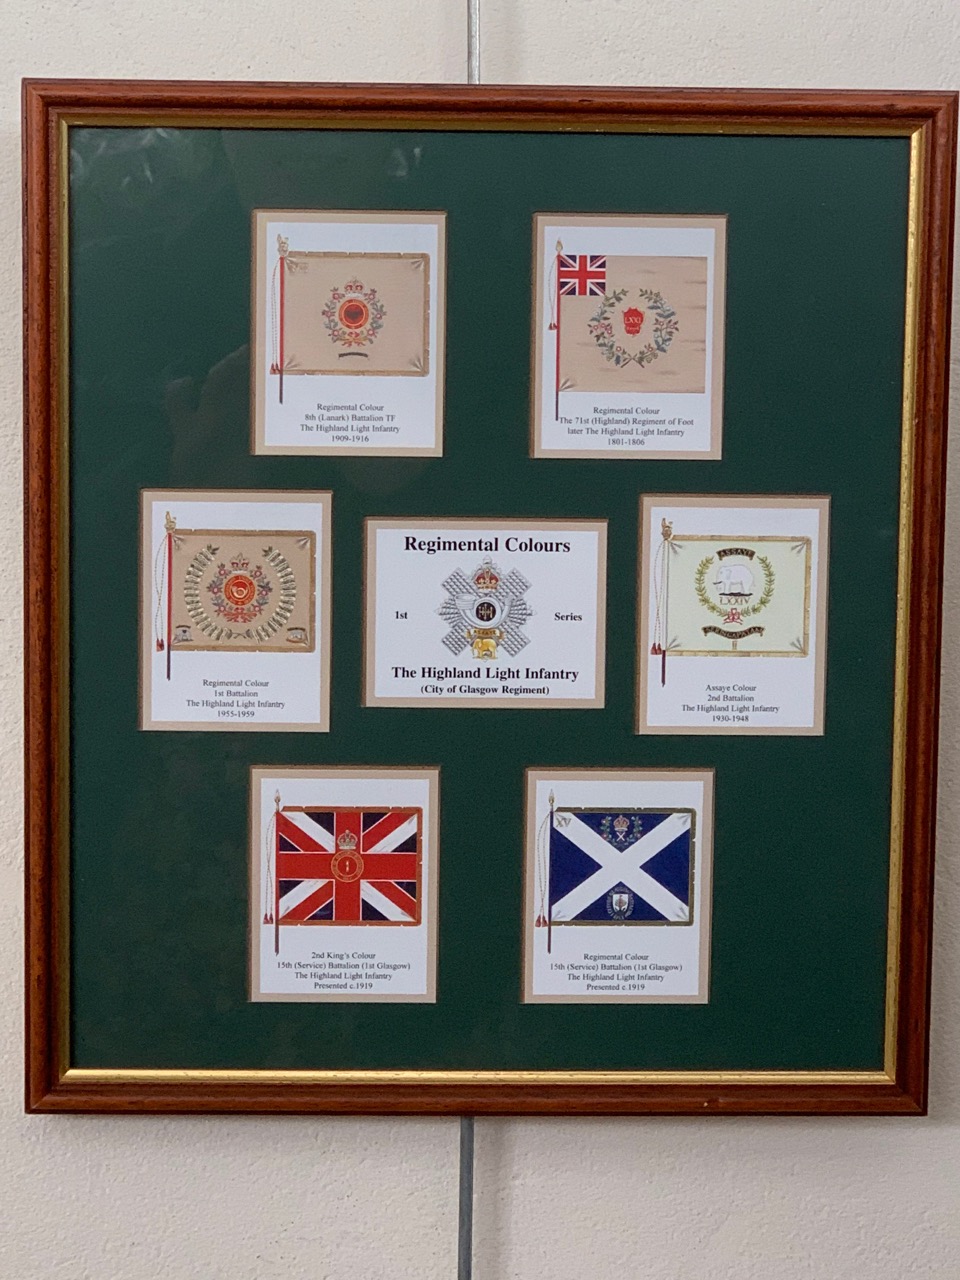 A Framed display of cards depicting the regimental colours of the Highland Light Infantry, 33 cm x